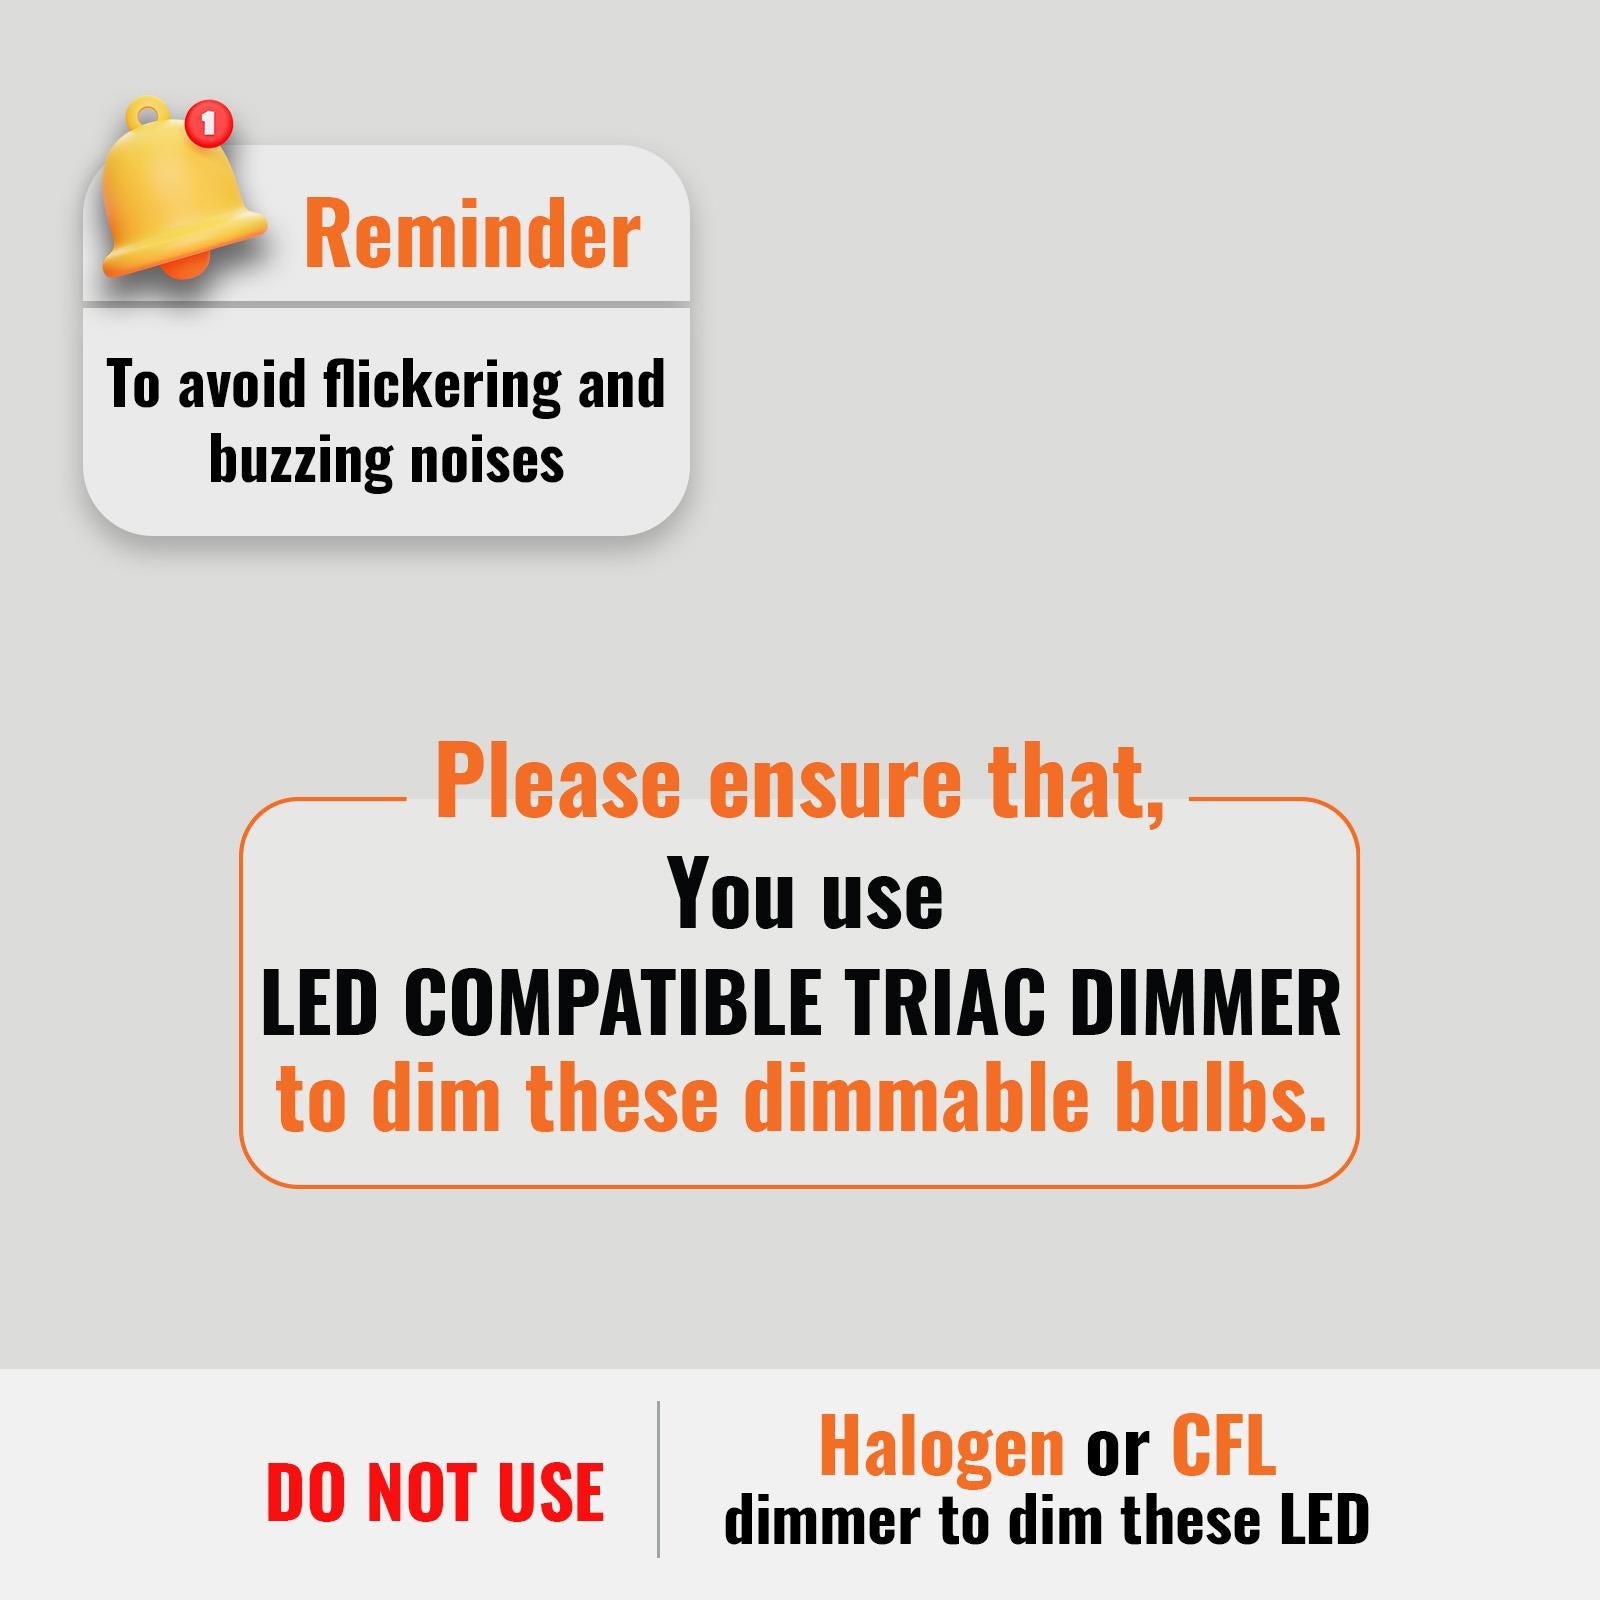 LED Dimmable GLS 14W (100w), ES/E27, 1521 Lumens, Warm White(2700K), 240V